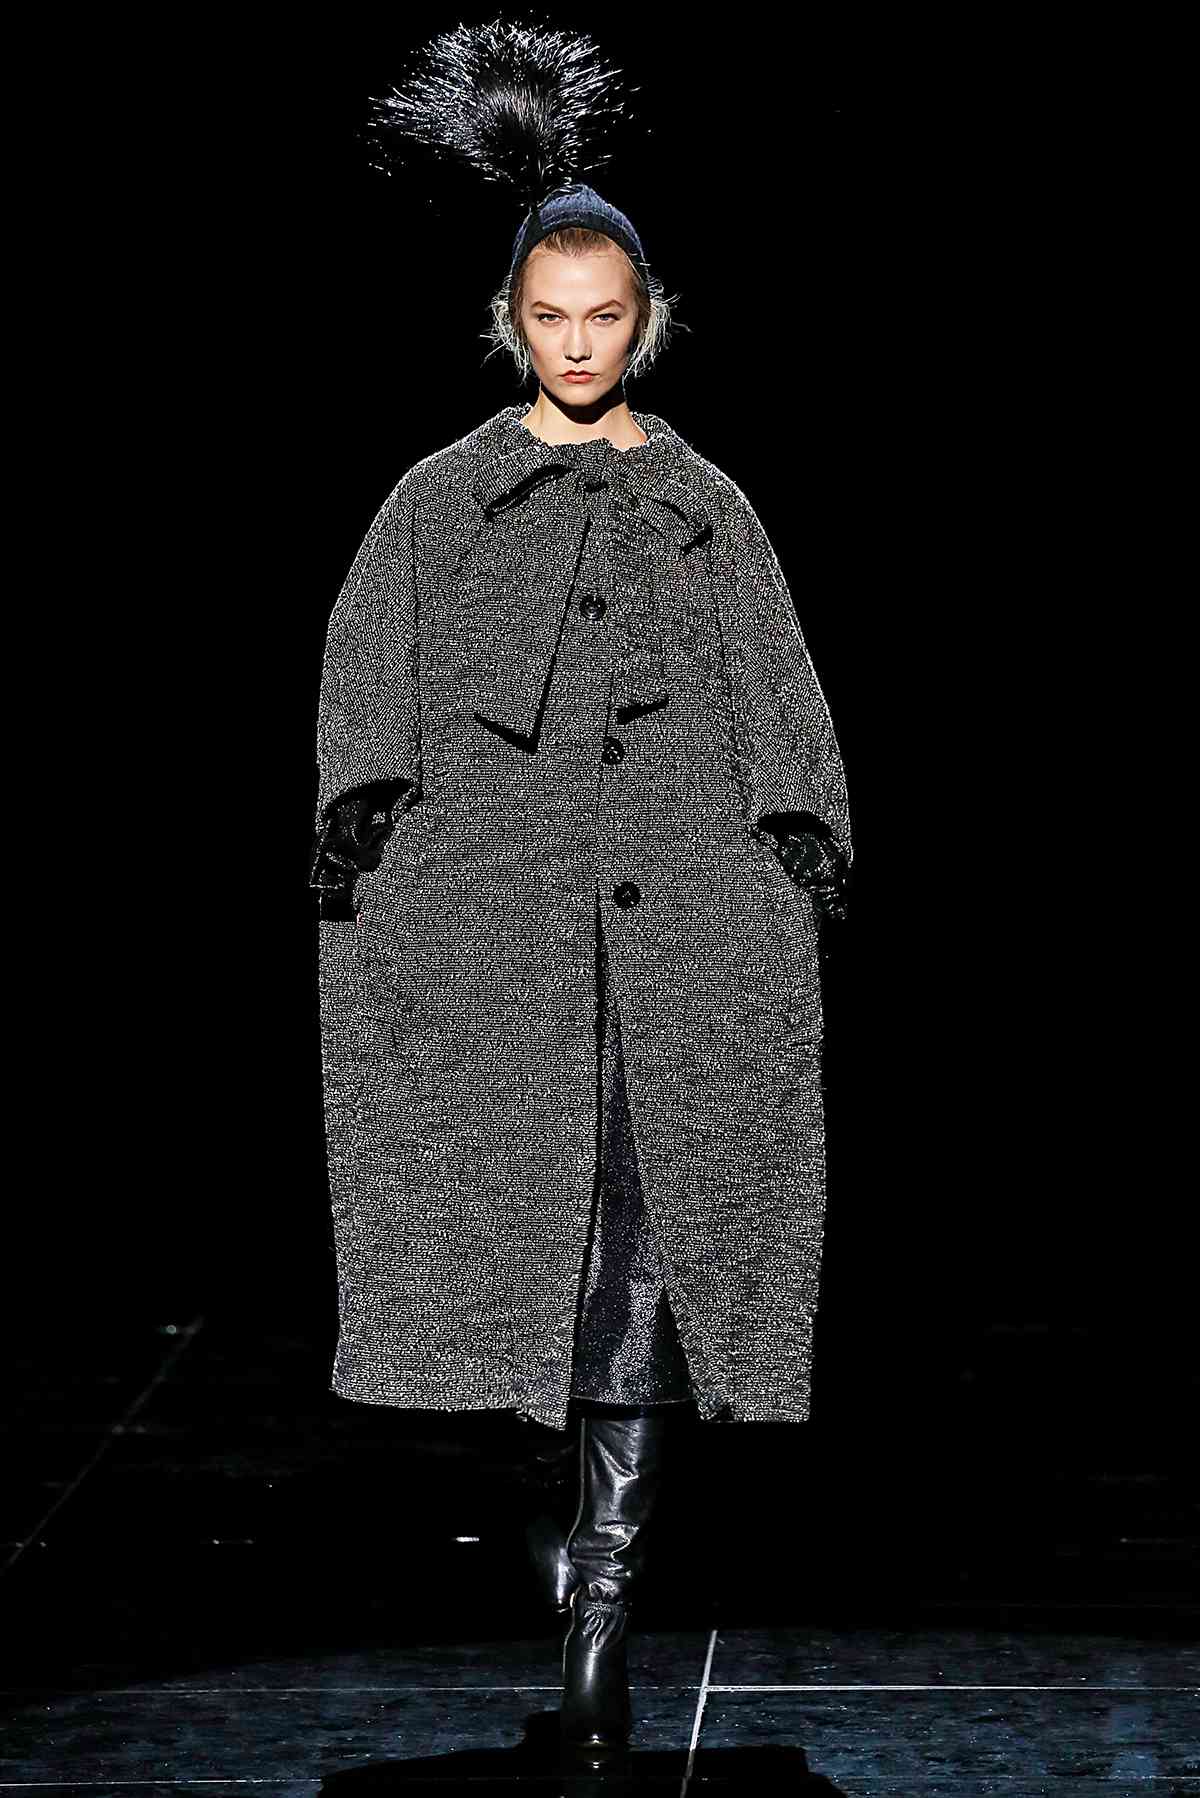 Marc Jacobs - Runway - February 2019 - New York Fashion Week